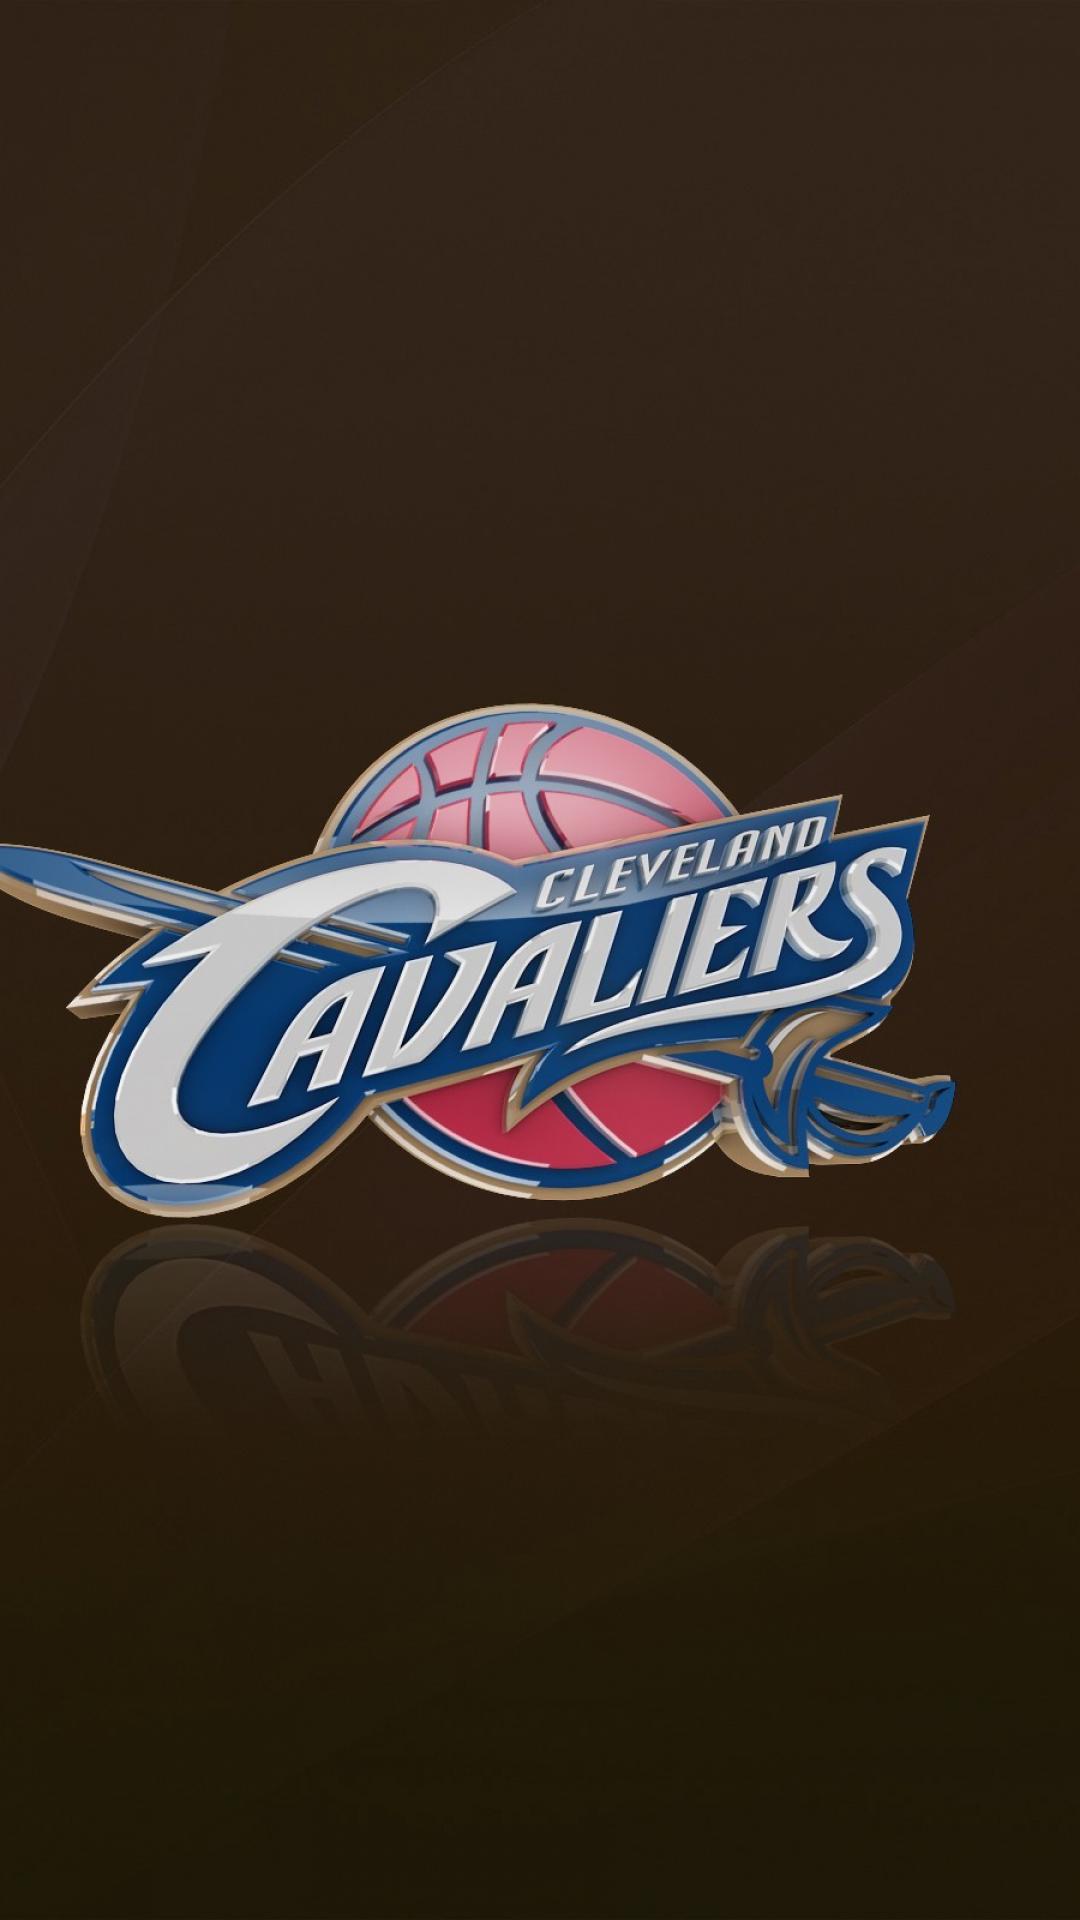 Cleveland Cavaliers Nba Basketball Logos Sports Wallpaper